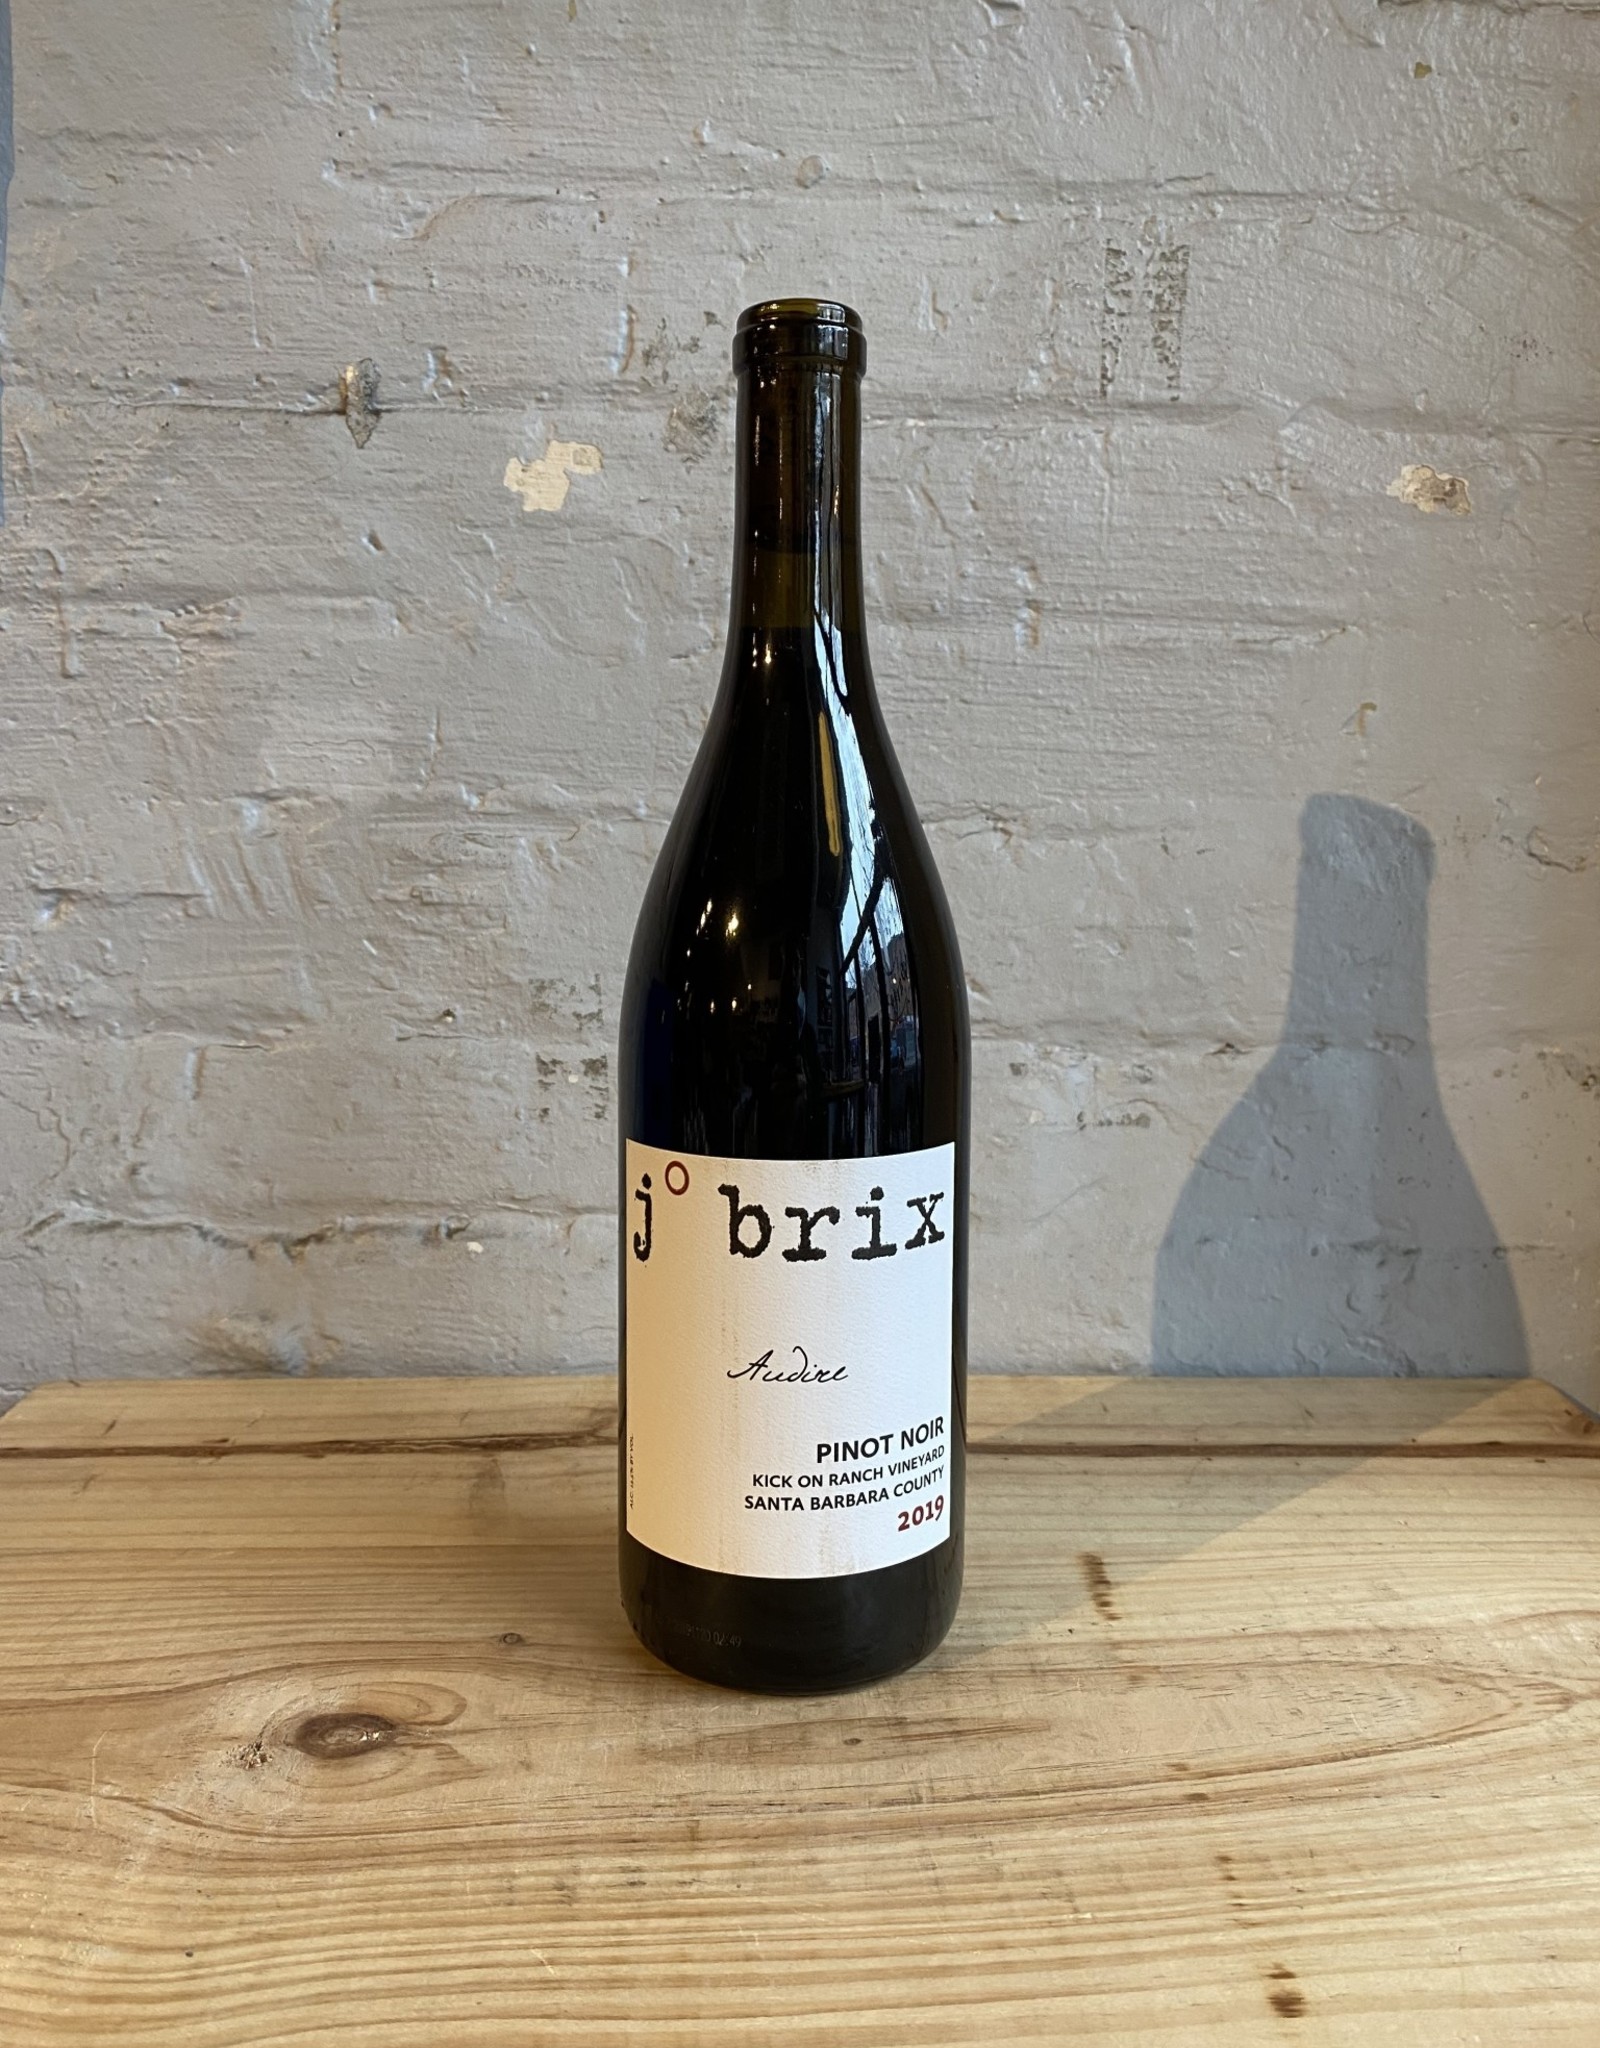 Wine 2019 J. Brix Audire Kickon Ranch Vyd Pinot Noir - Santa Barbara Cty, California (750ml)